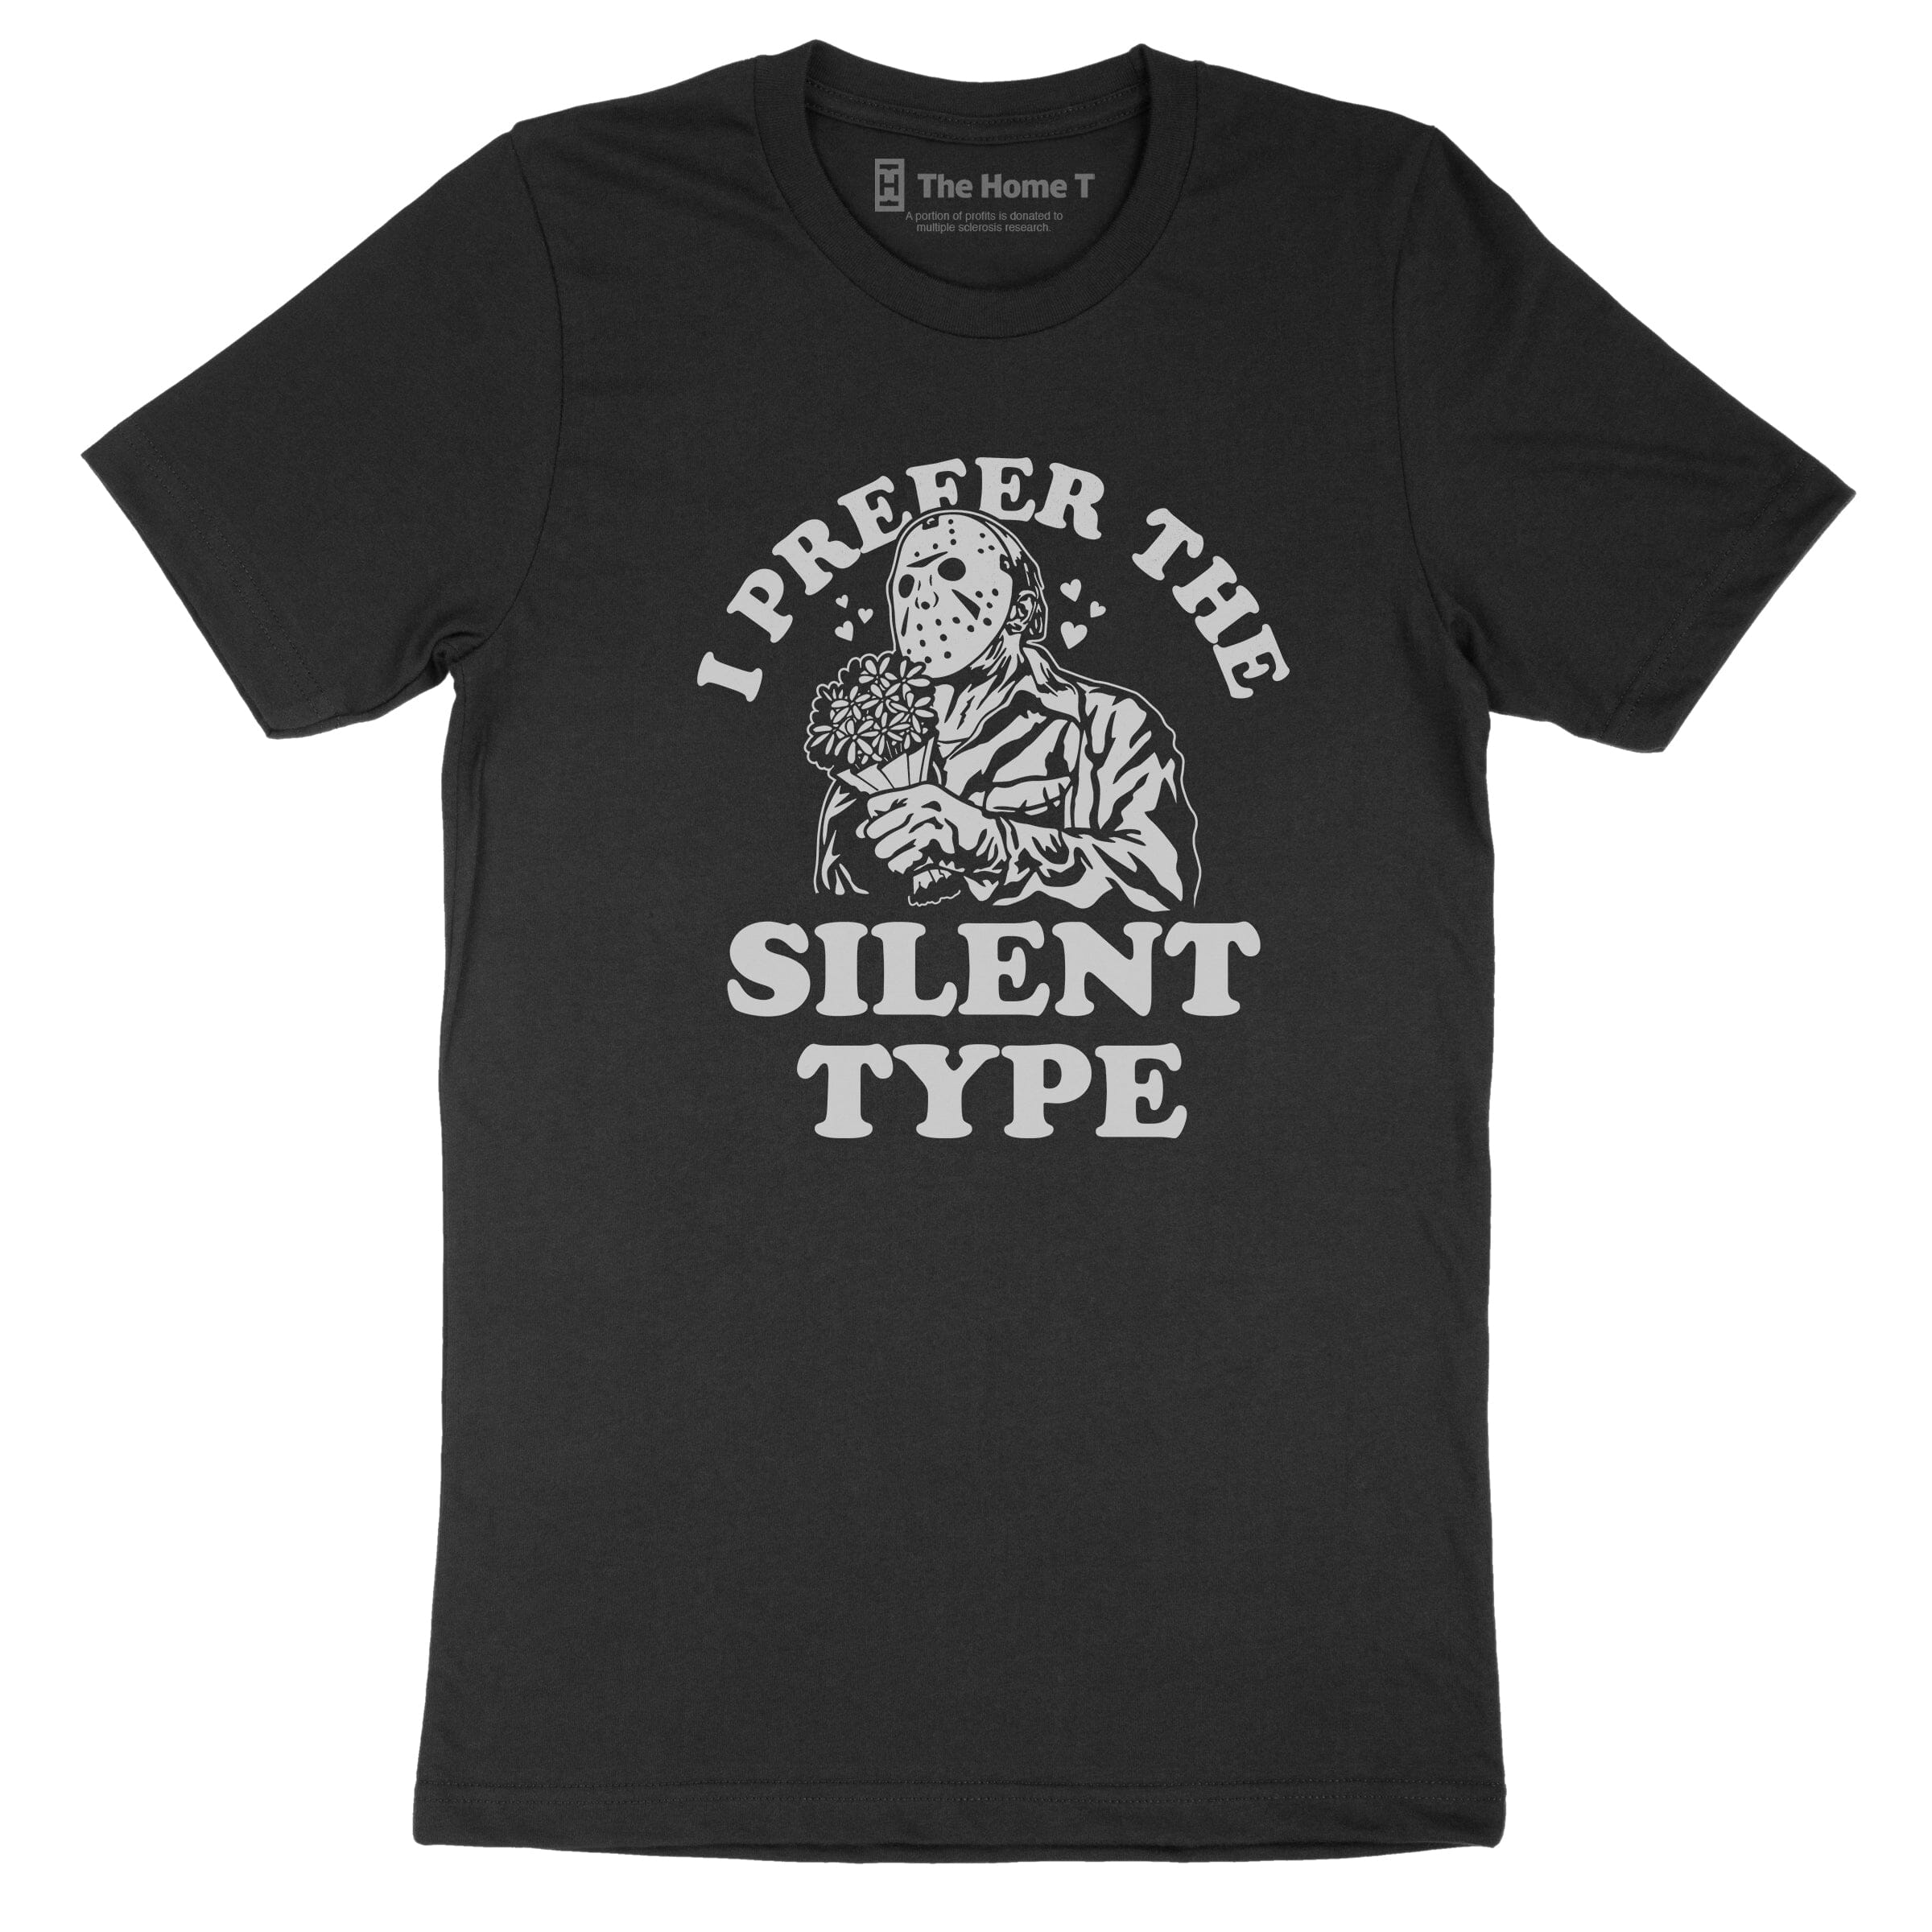 I Prefer the Silent Type